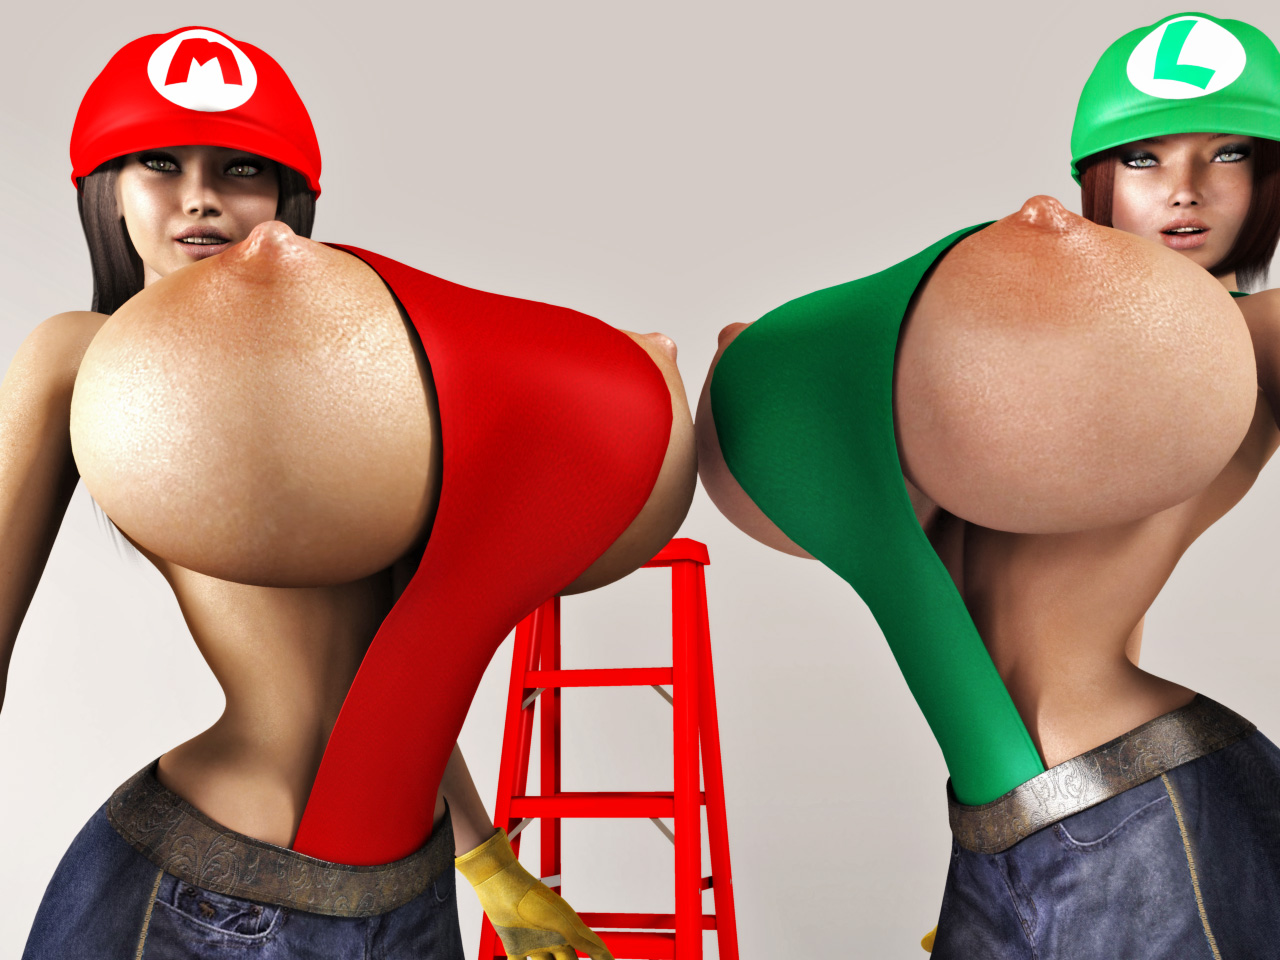 Luigi got big titties